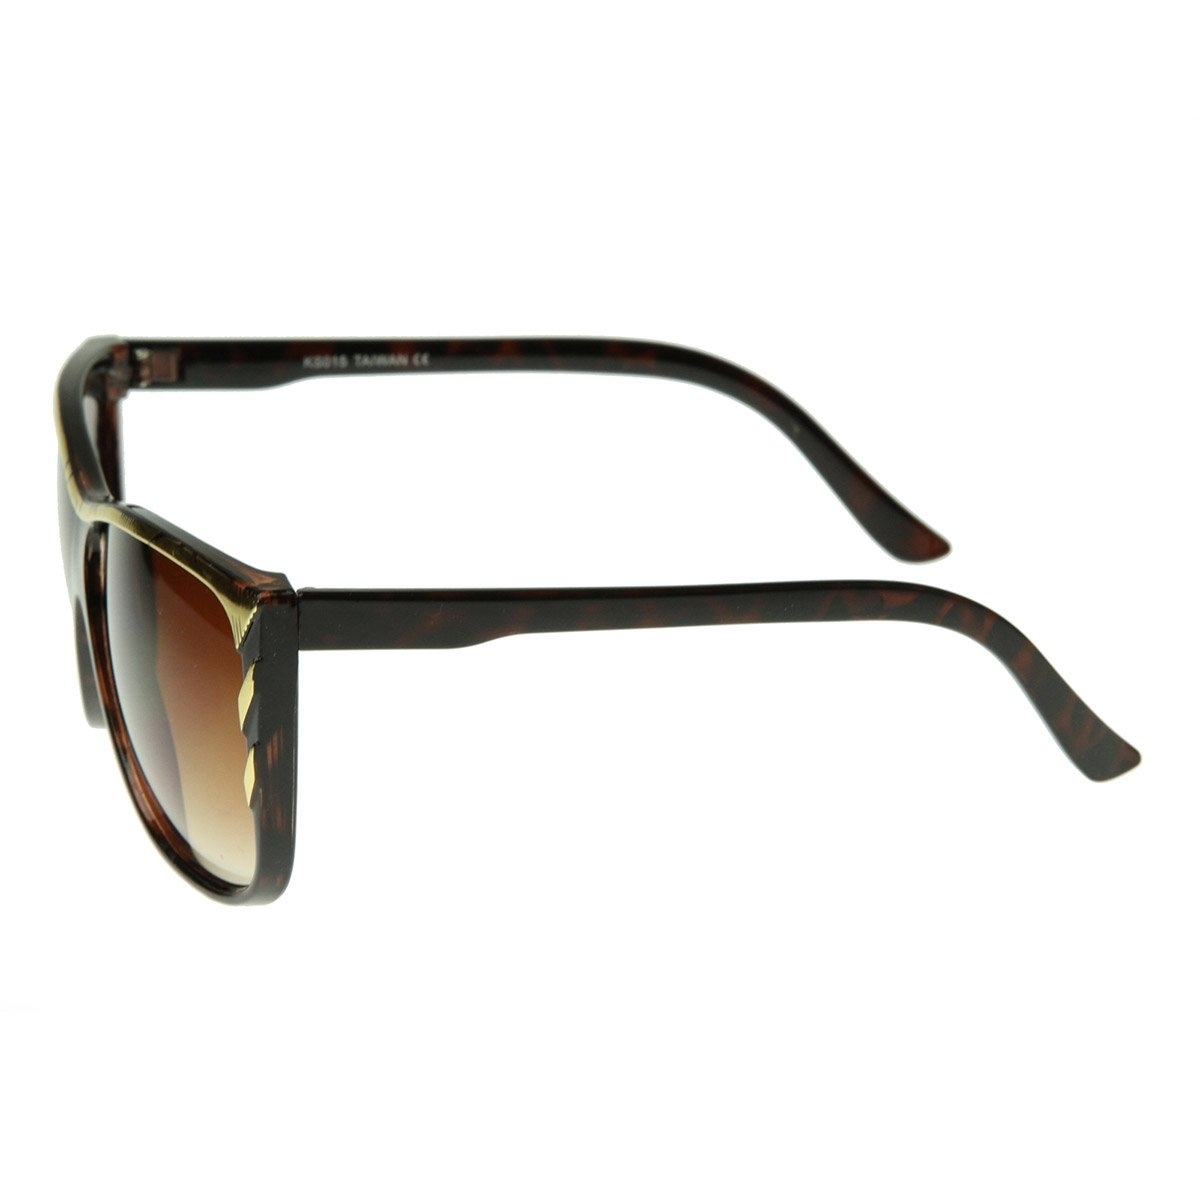 New Larger Modern Retro Fashion Gold Tip Point Detail Horn Rimmed Sunglasses - Black